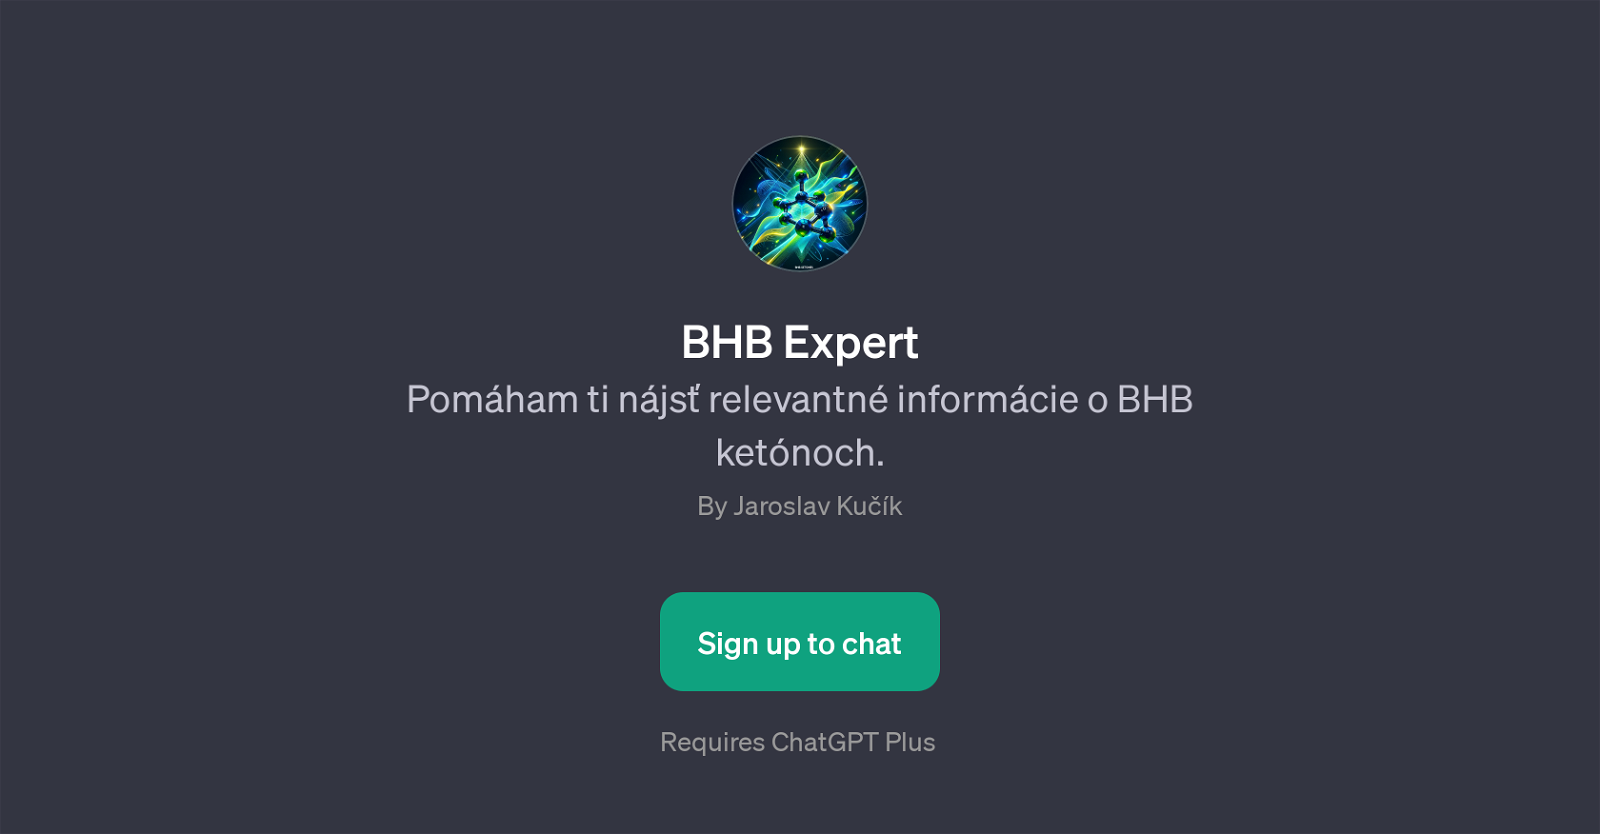 BHB Expert website